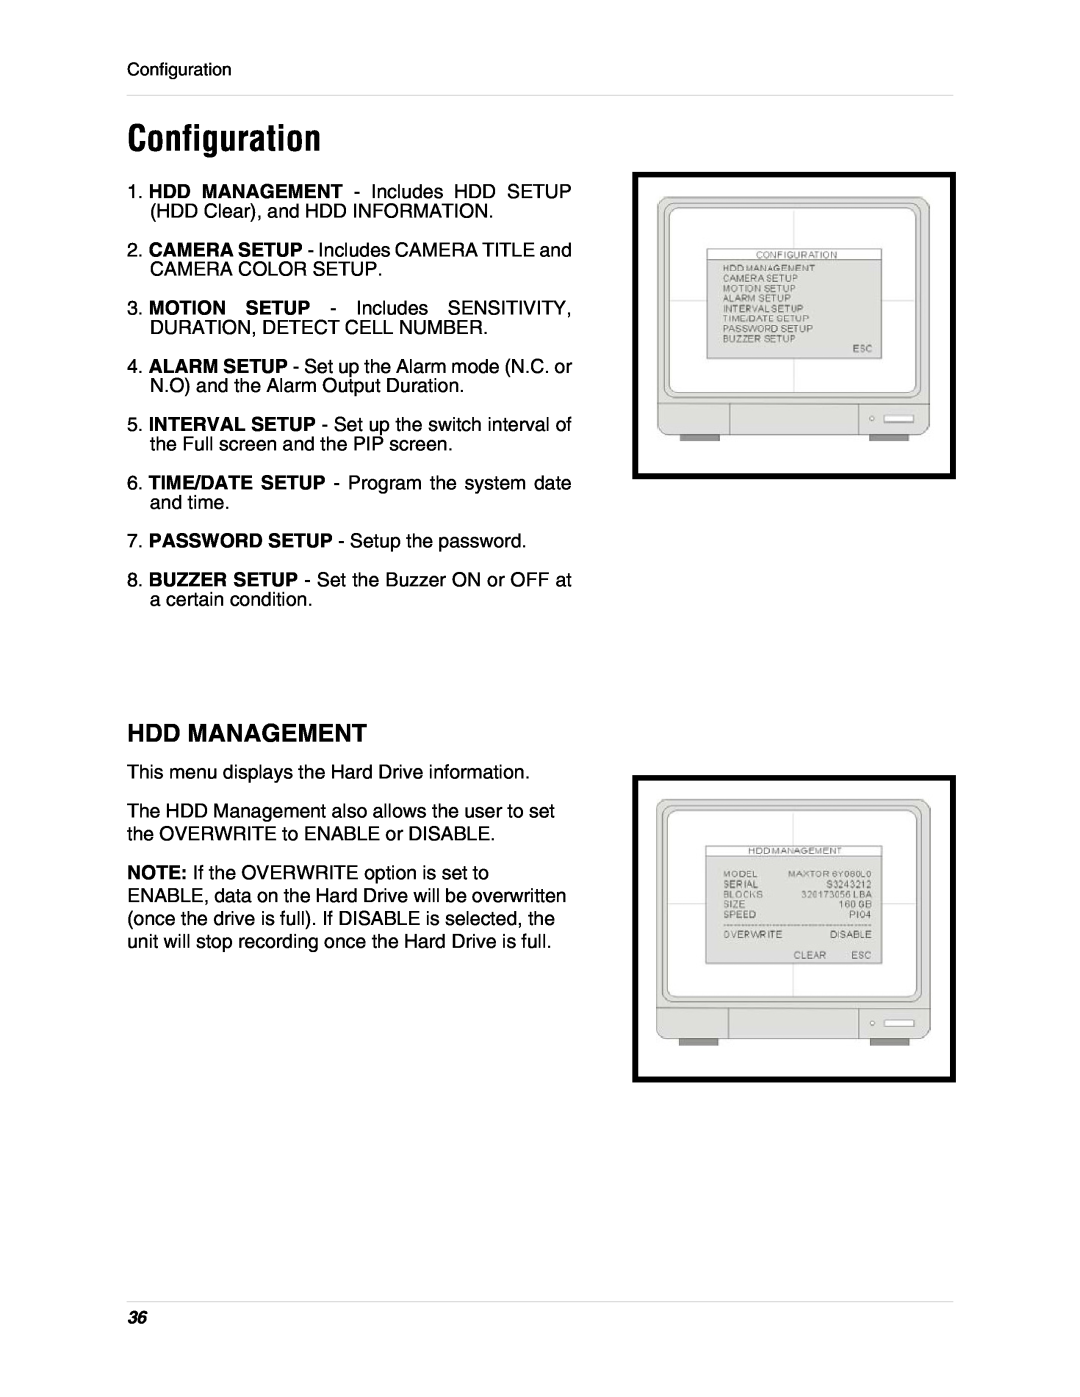 LOREX Technology L15D400 instruction manual Configuration, Hdd Management 